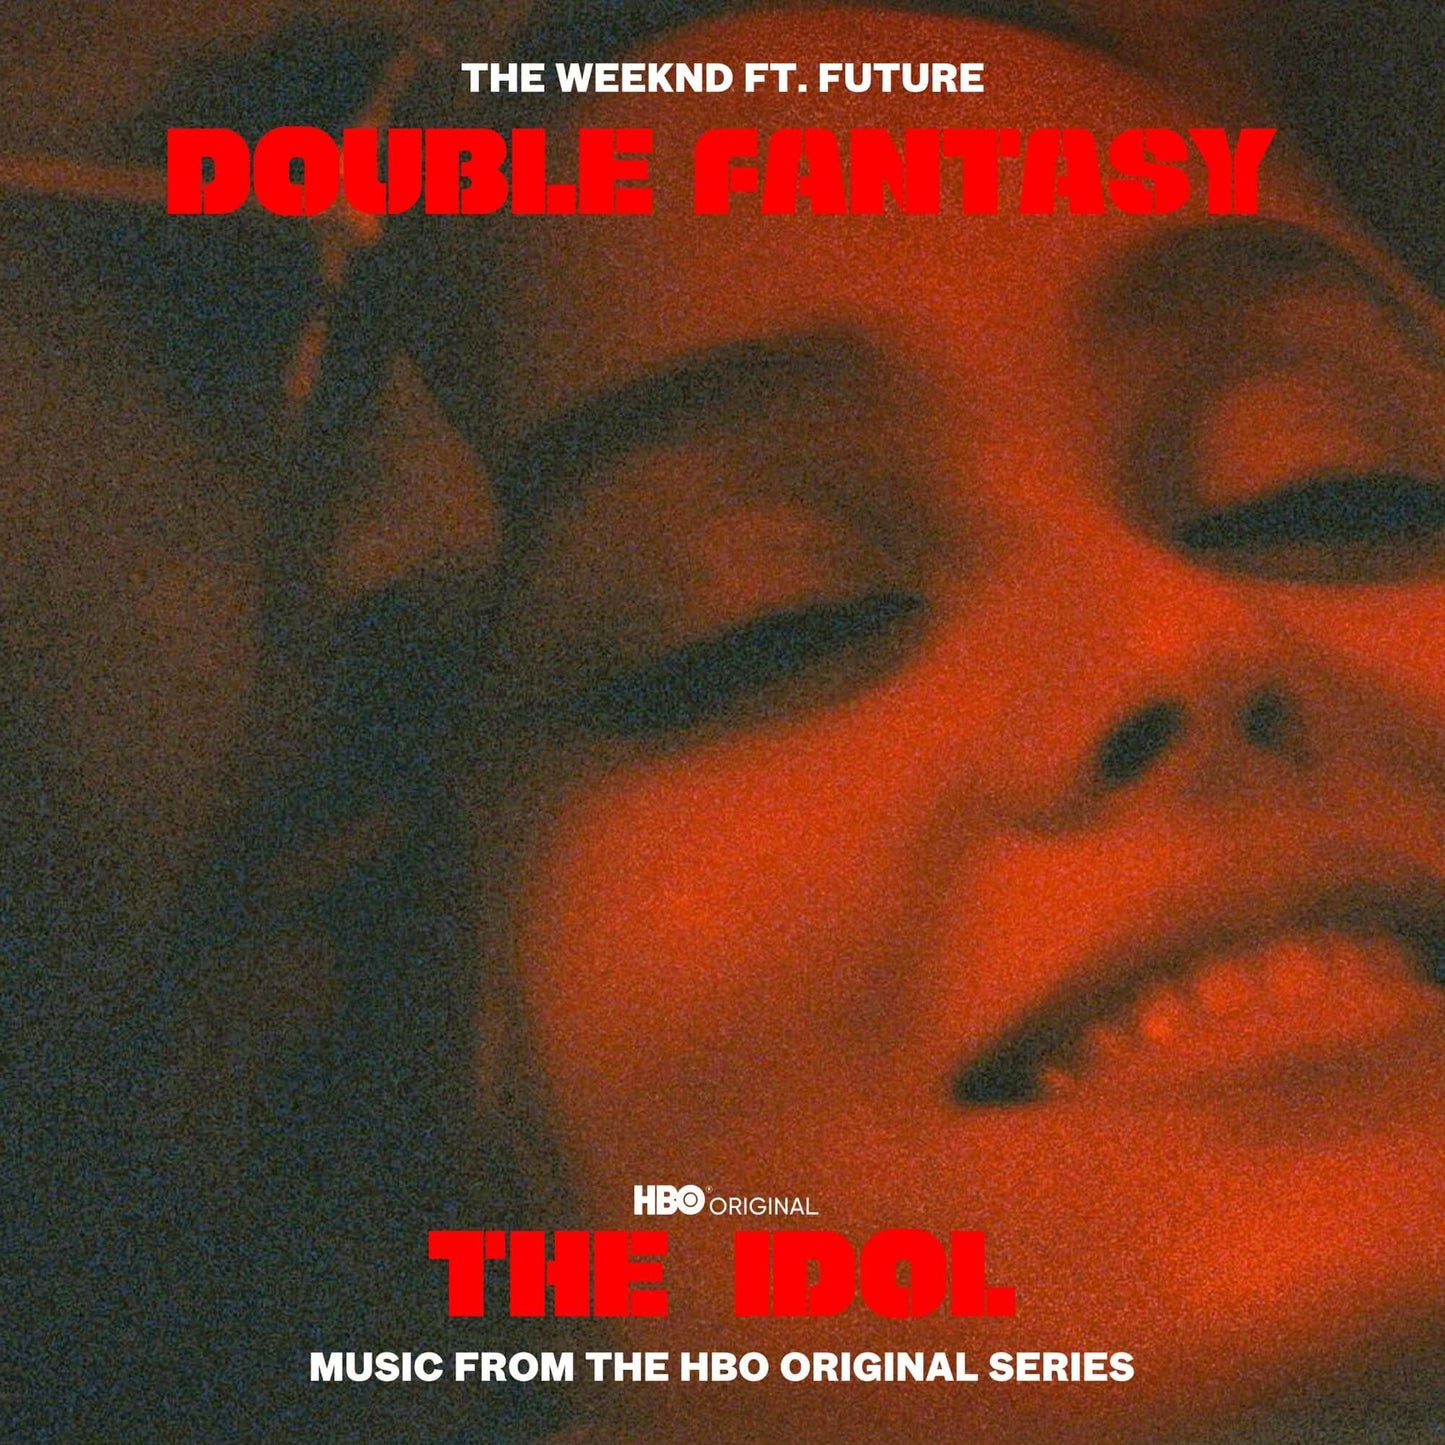 The Weeknd &amp; Future - Doble fantasía (Studio Acapella)